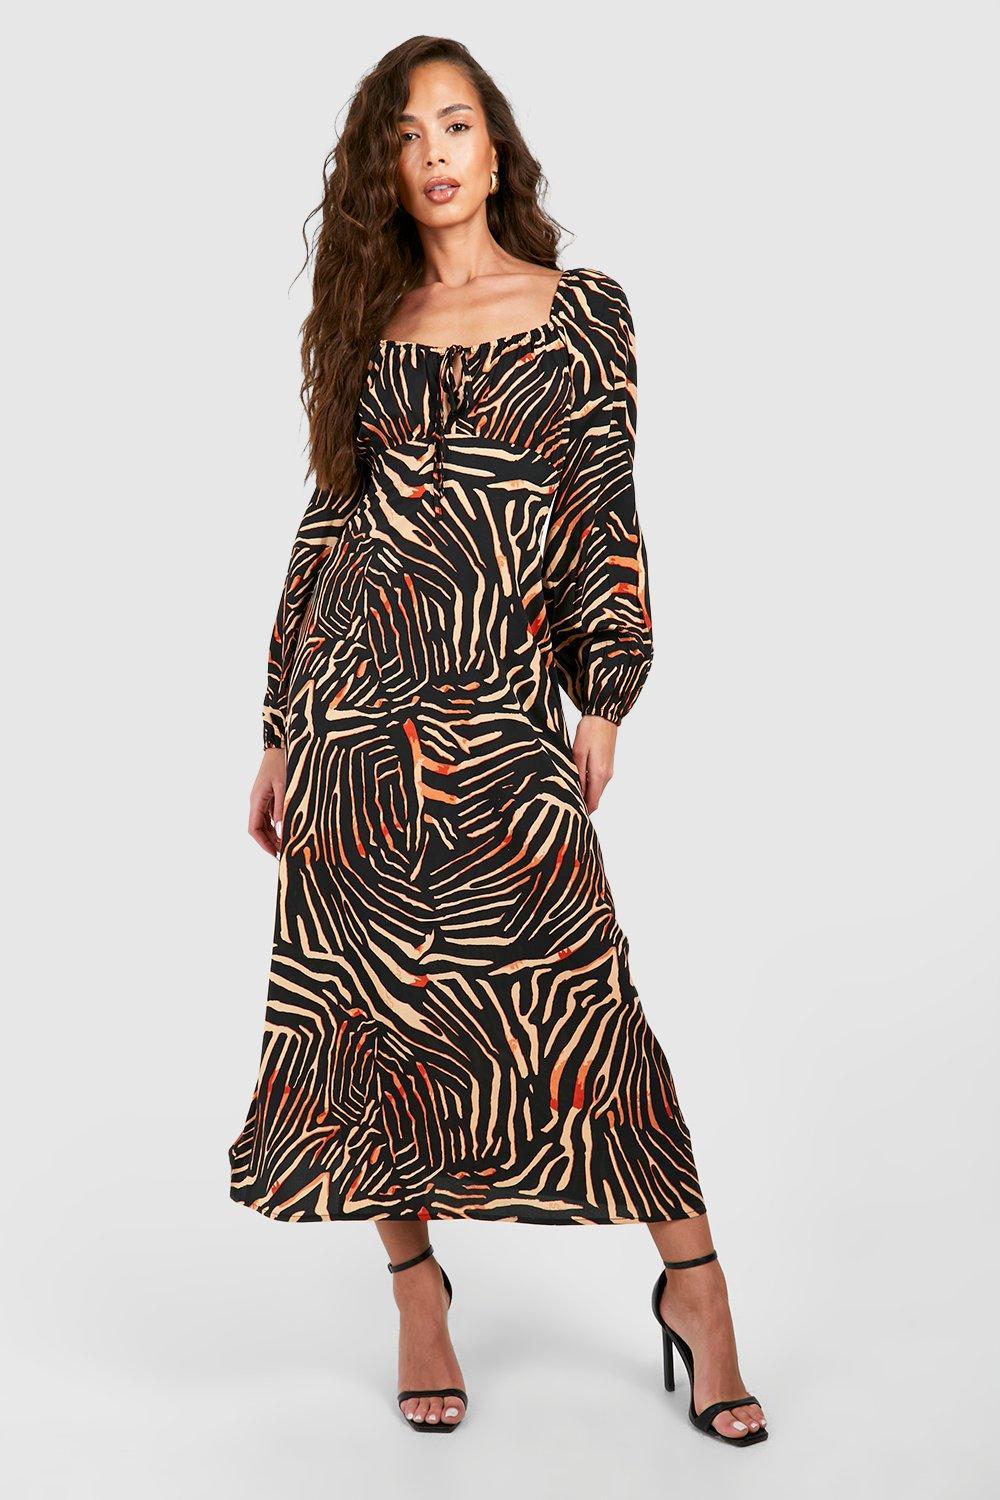 Zebra Print Dress  Dress, Zebra print dress, Large bust